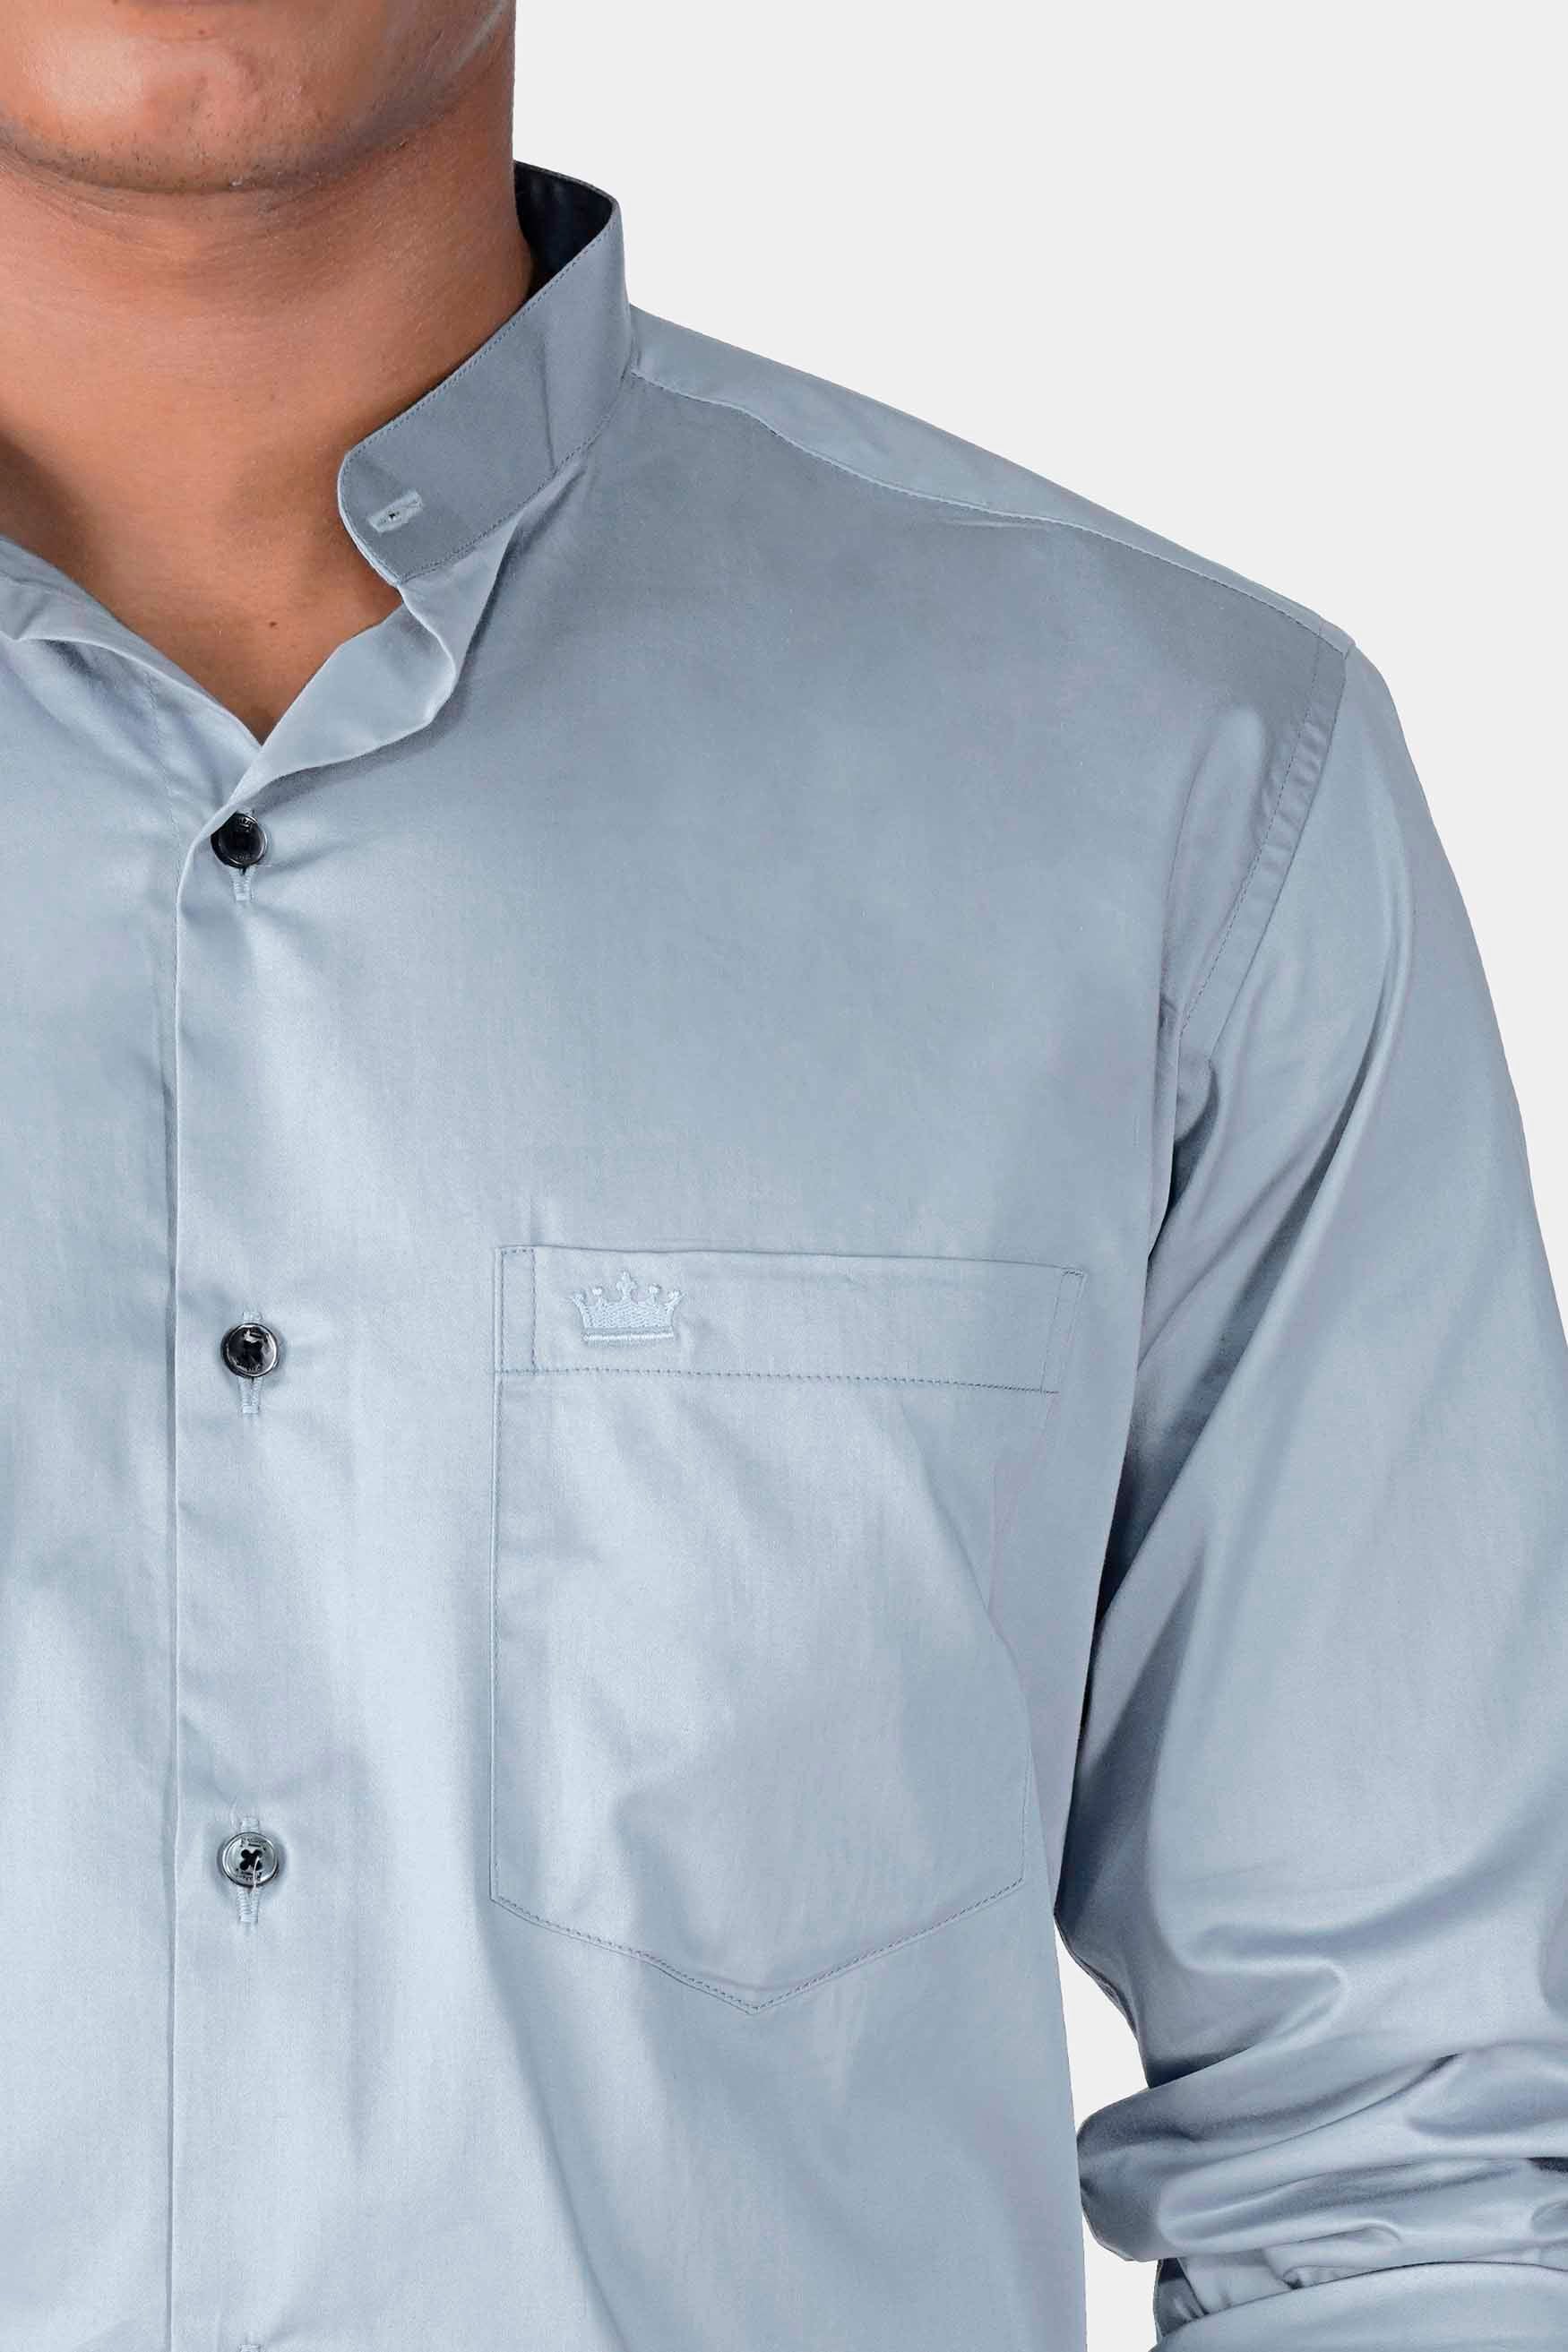 Ghost Blue Subtle Sheen Super Soft Premium Cotton Mandarin Shirt